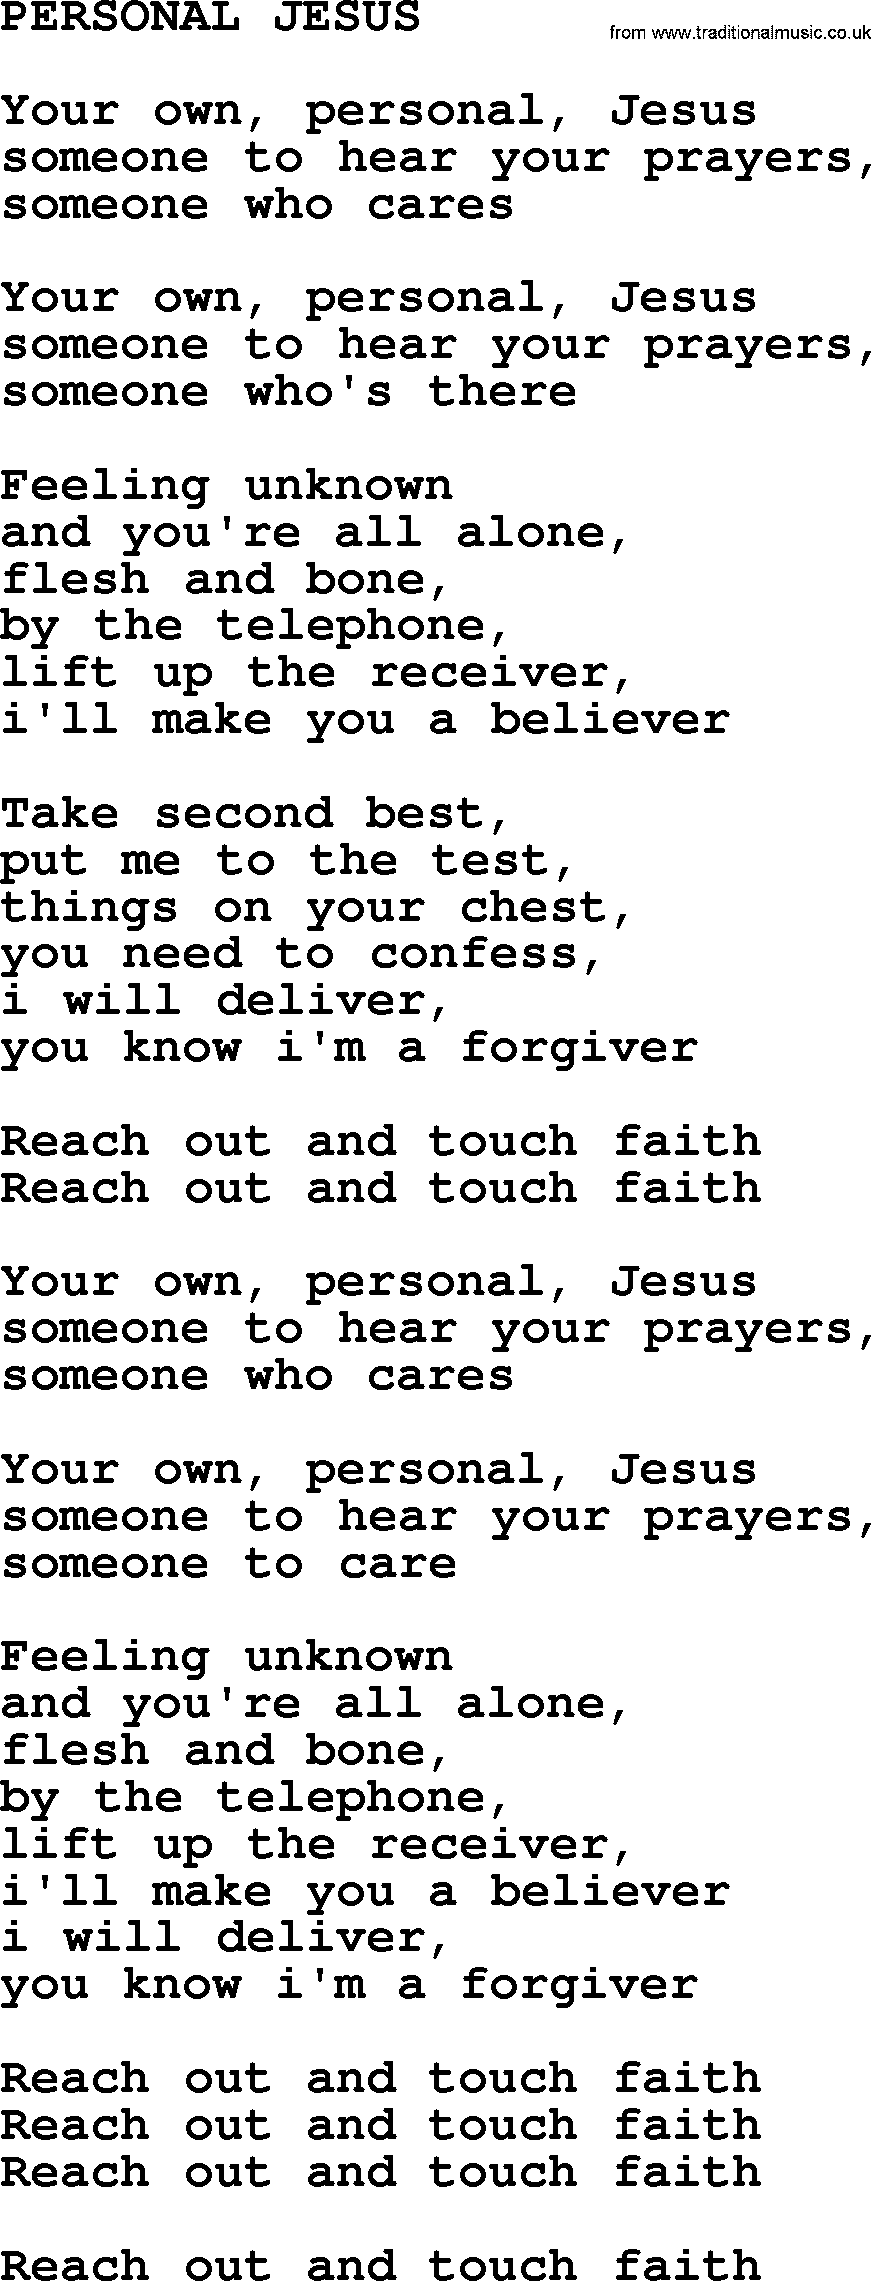 Johnny Cash song Personal Jesus.txt lyrics